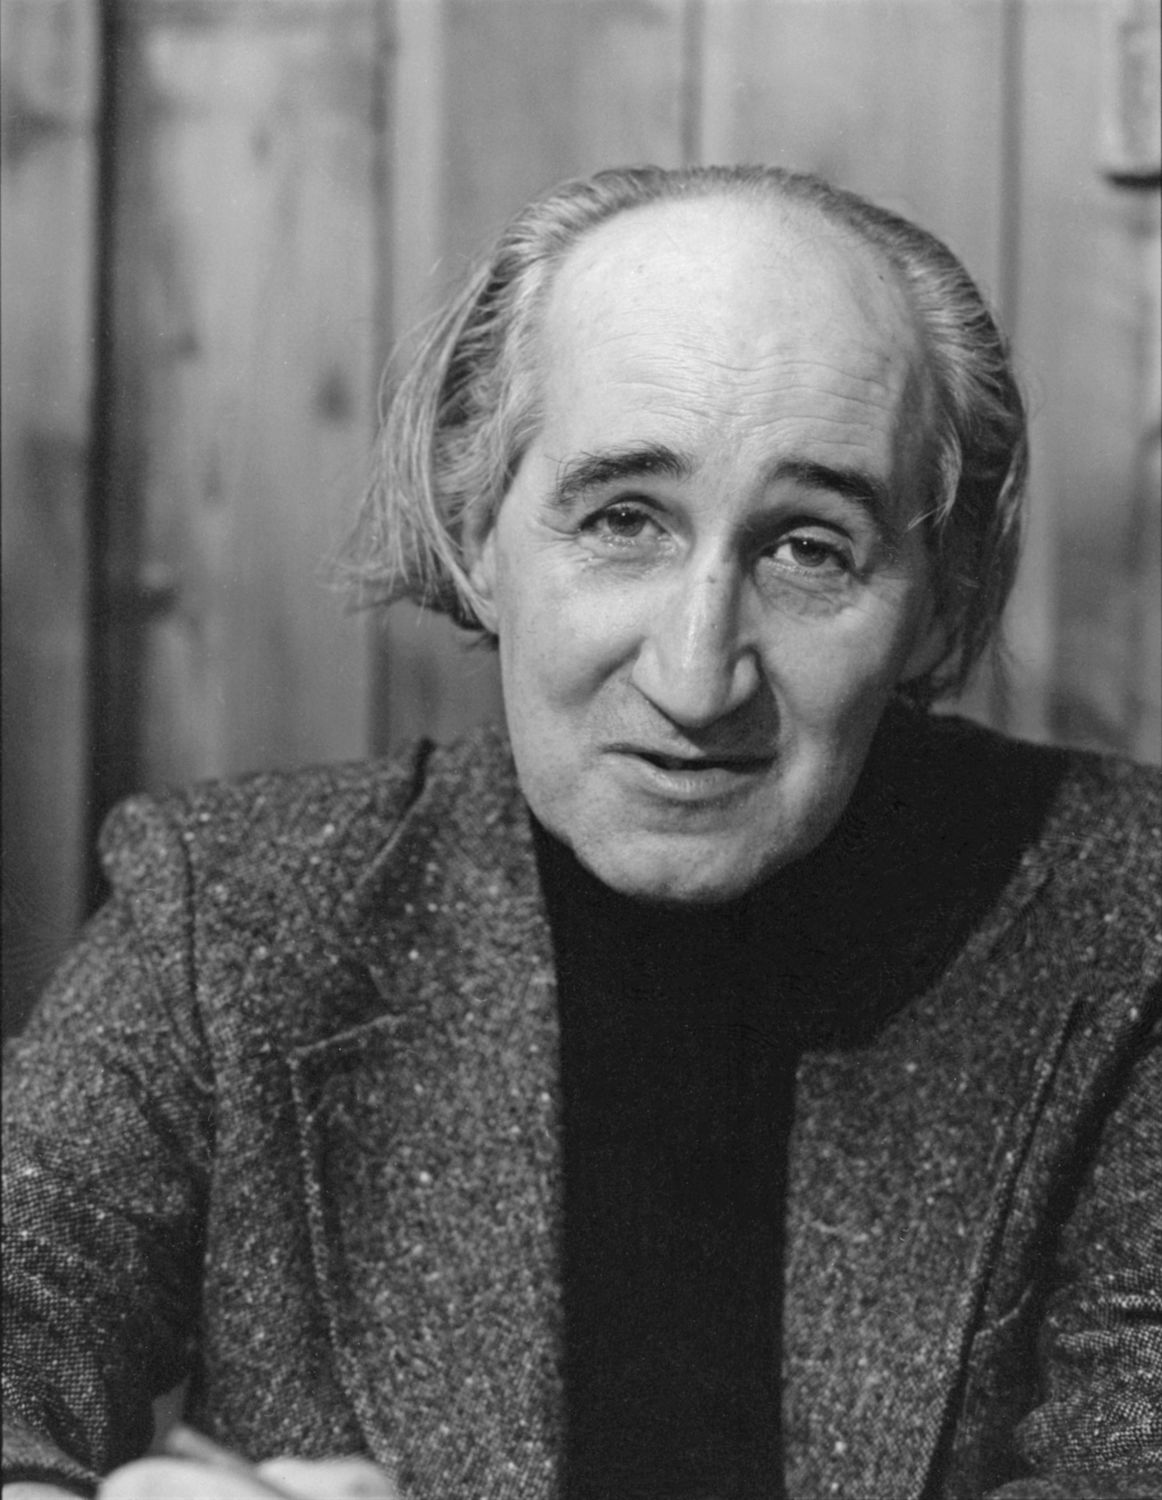 Jacques Ferron in 1977